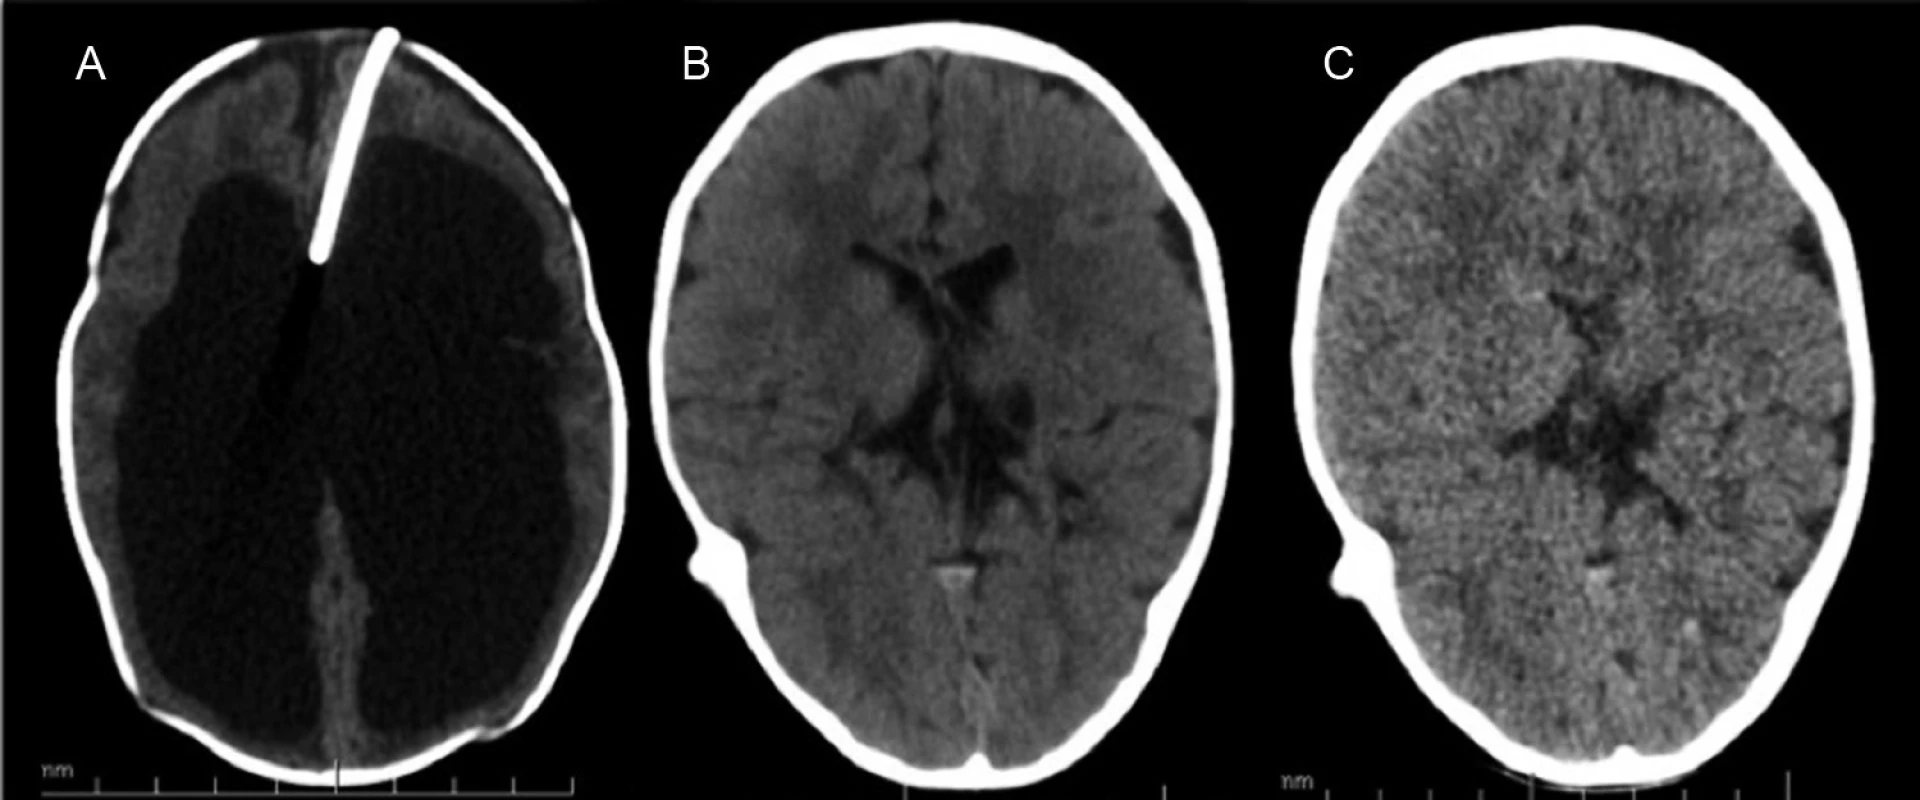 Hydrocefalus riešený rezervoárom a ventrikuloperitoneálnym shuntom.
Typické zmenšenie objemu komôr.
A – CT mozgu pred zavedením VPS s implantovaným komorovým rezervoárom, B – CT mozgu 1 rok po implantácii, C – CT mozgu 2 roky po implantácii VPS.
Fig. 1. Hydrocephalus cured with a ventriculoperitoneal shunt. A typical decrease of the chamber volume. 
A – Brain CT before the introduction of CPS ith implanted ventricular reservoir, B – brain CT one year after the implantation, C – brain CT two years of VPS implantation.